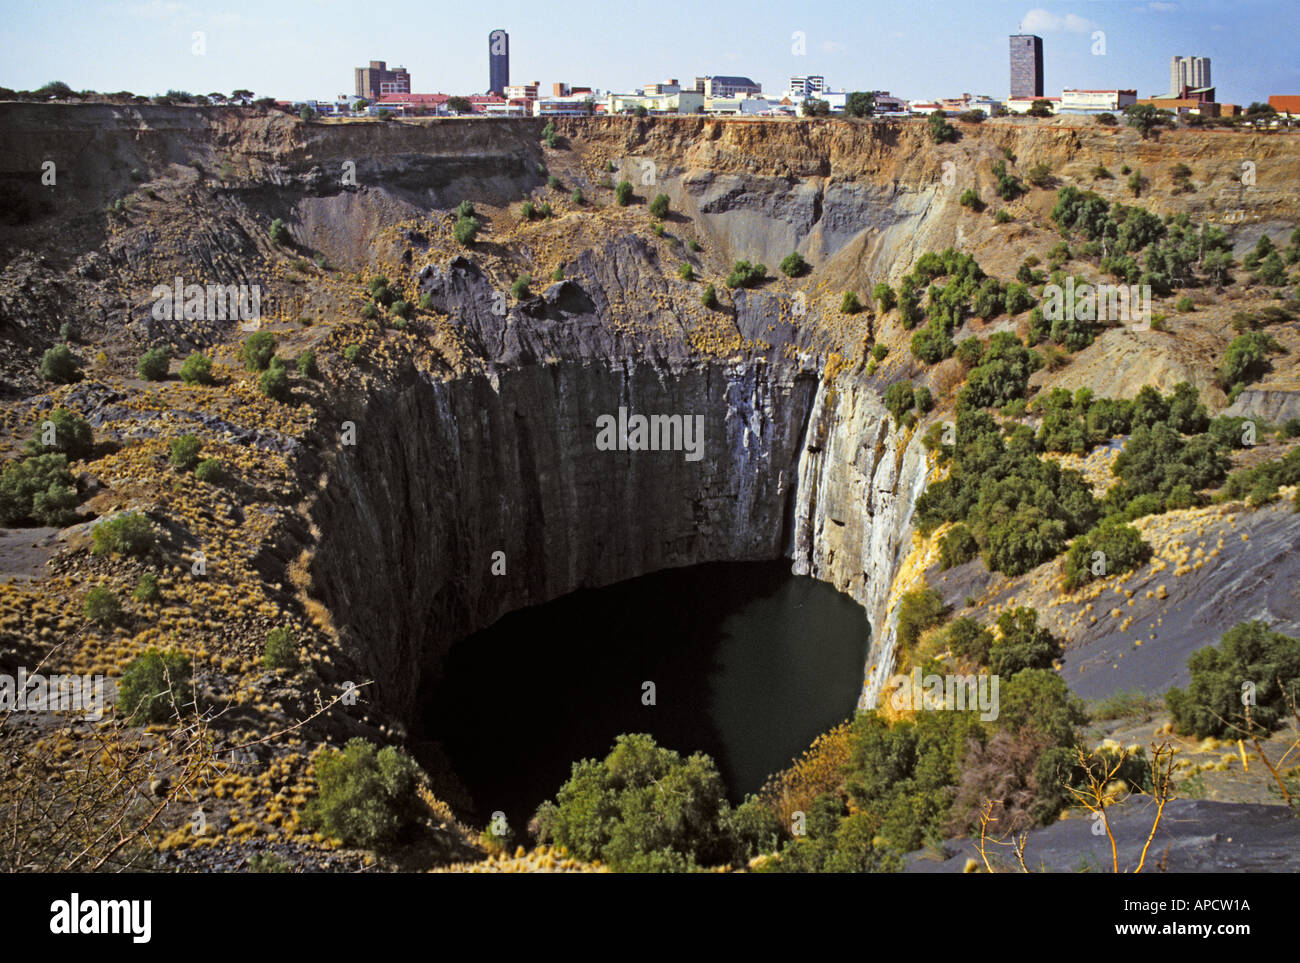 Das große Loch Diamantenmine Kimberley in Südafrika Stockfoto